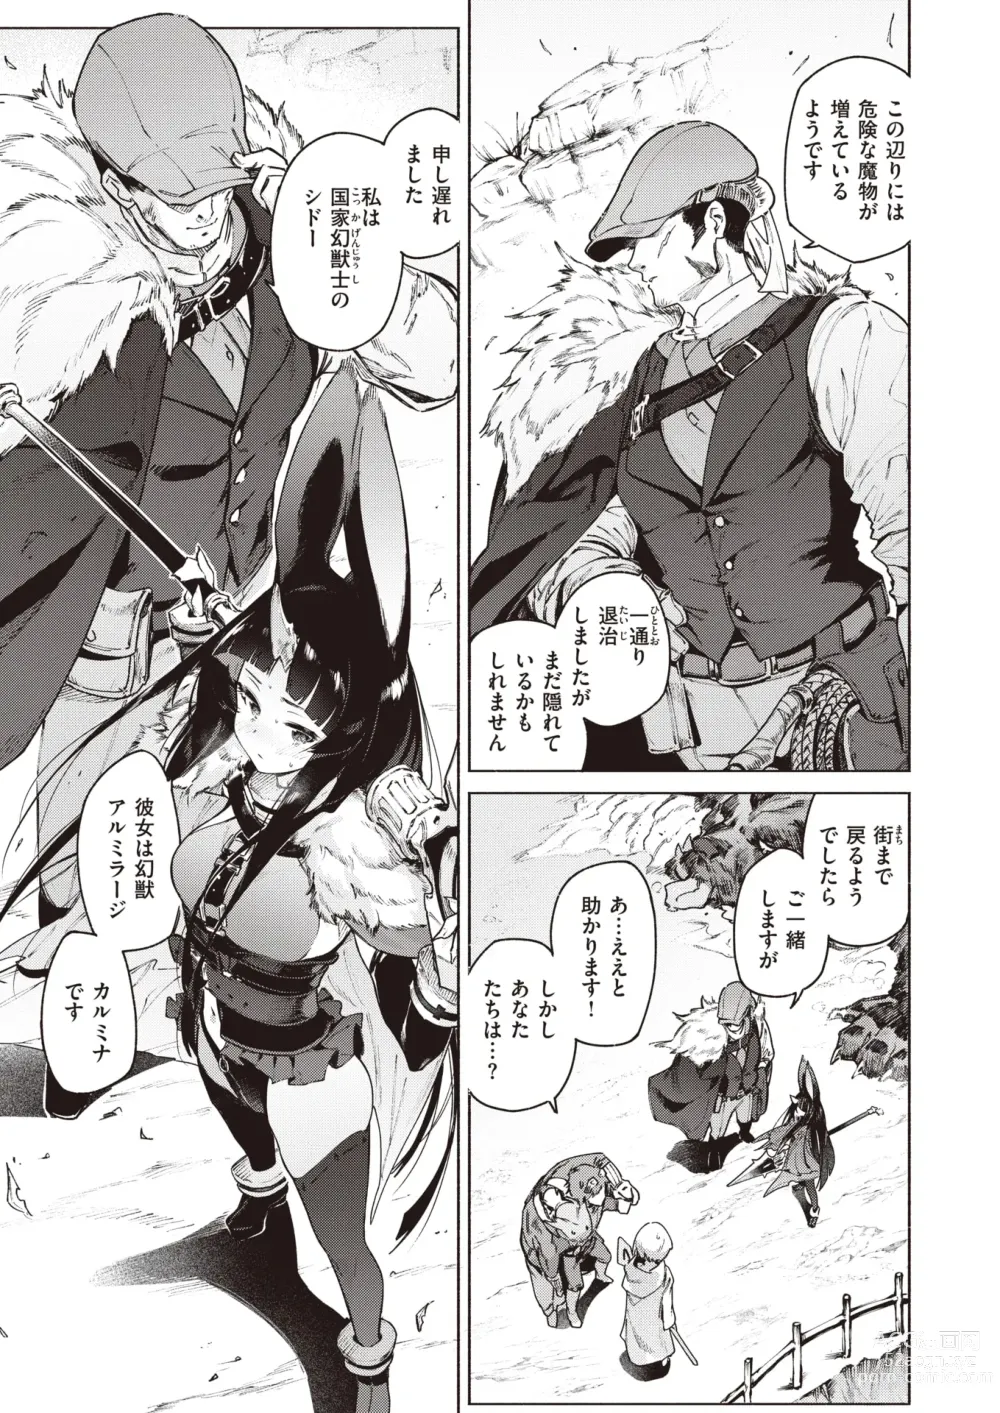 Page 4 of manga Isekai Rakuten Vol. 29